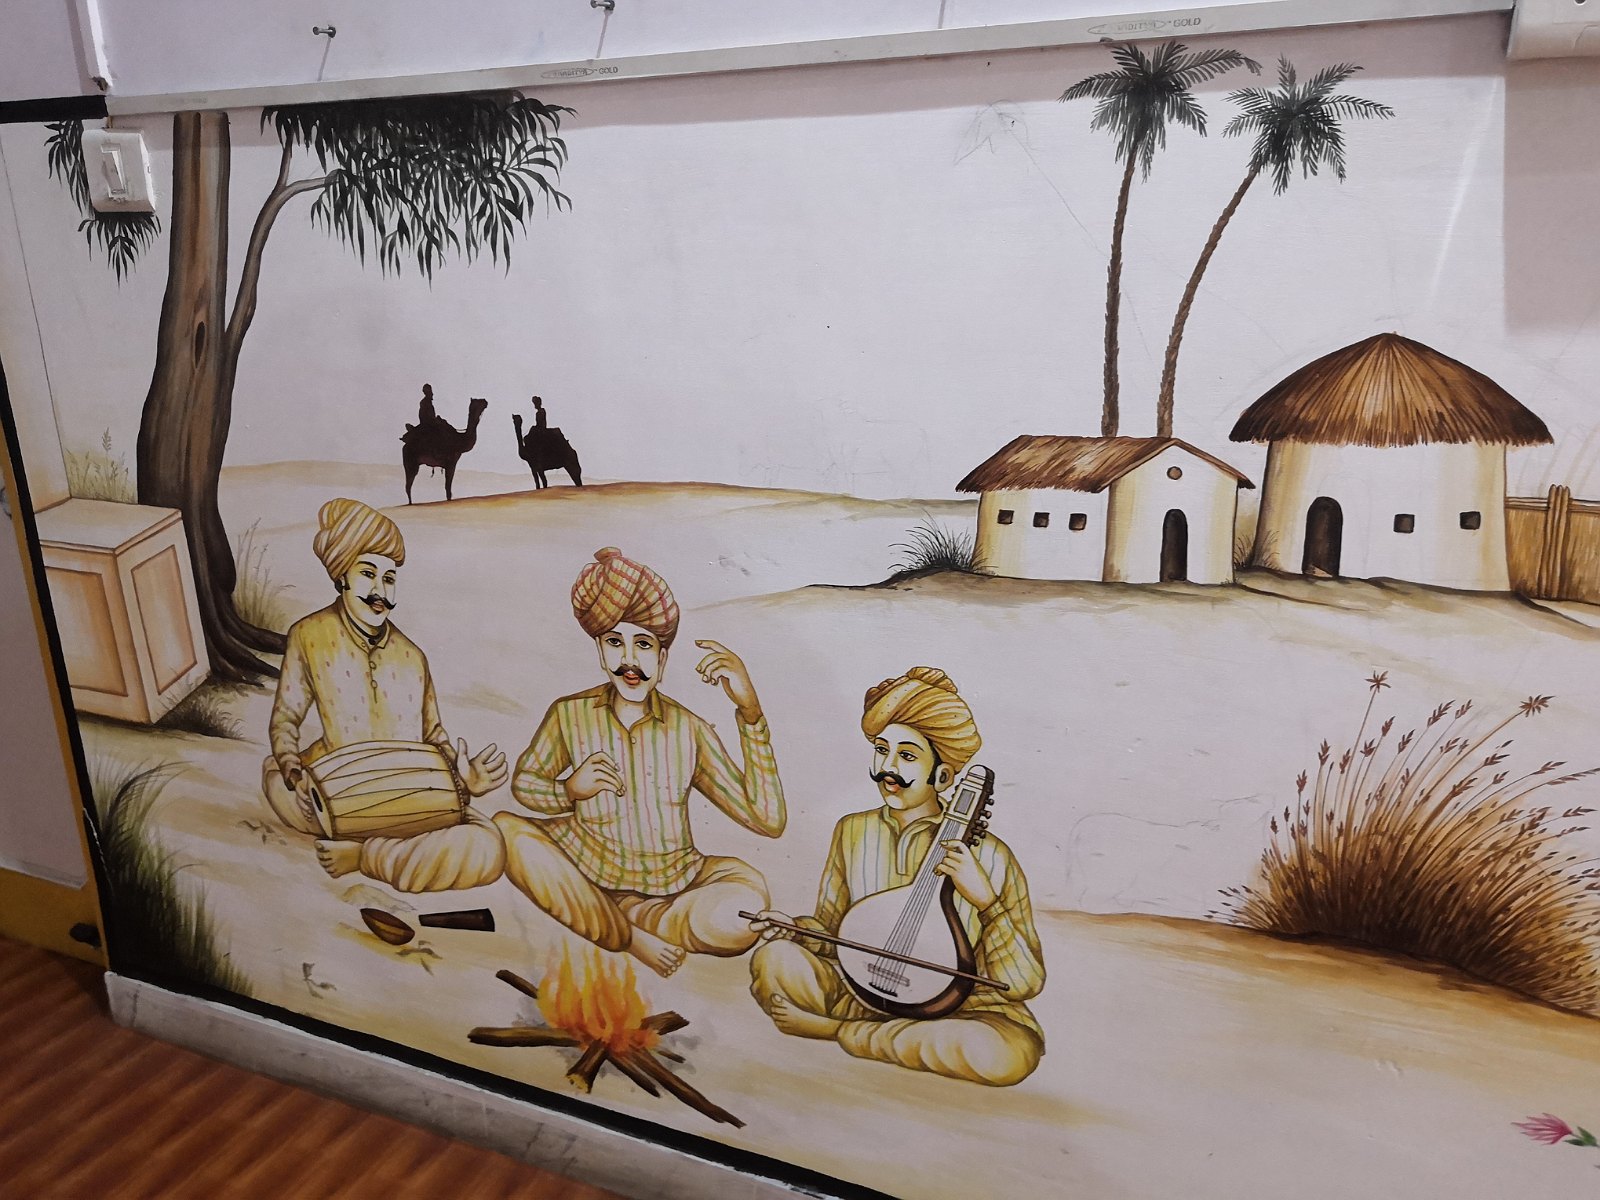 39. Mural w mieście Dżaipur.